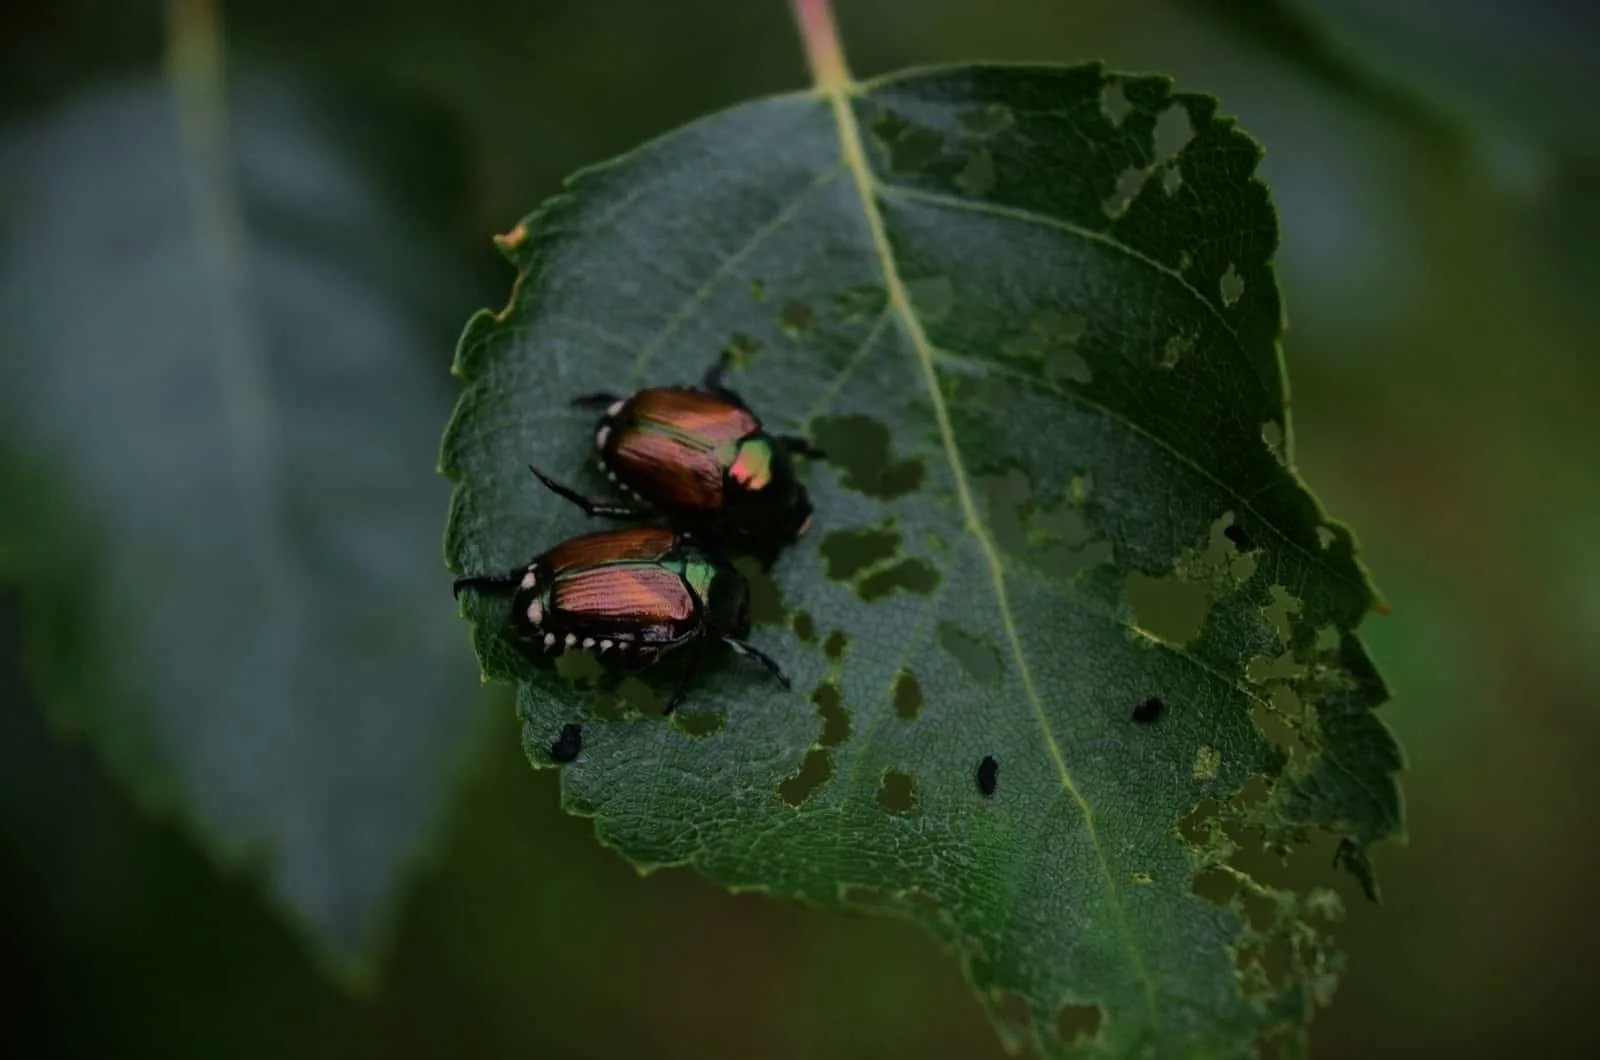 two Japanese Beetles